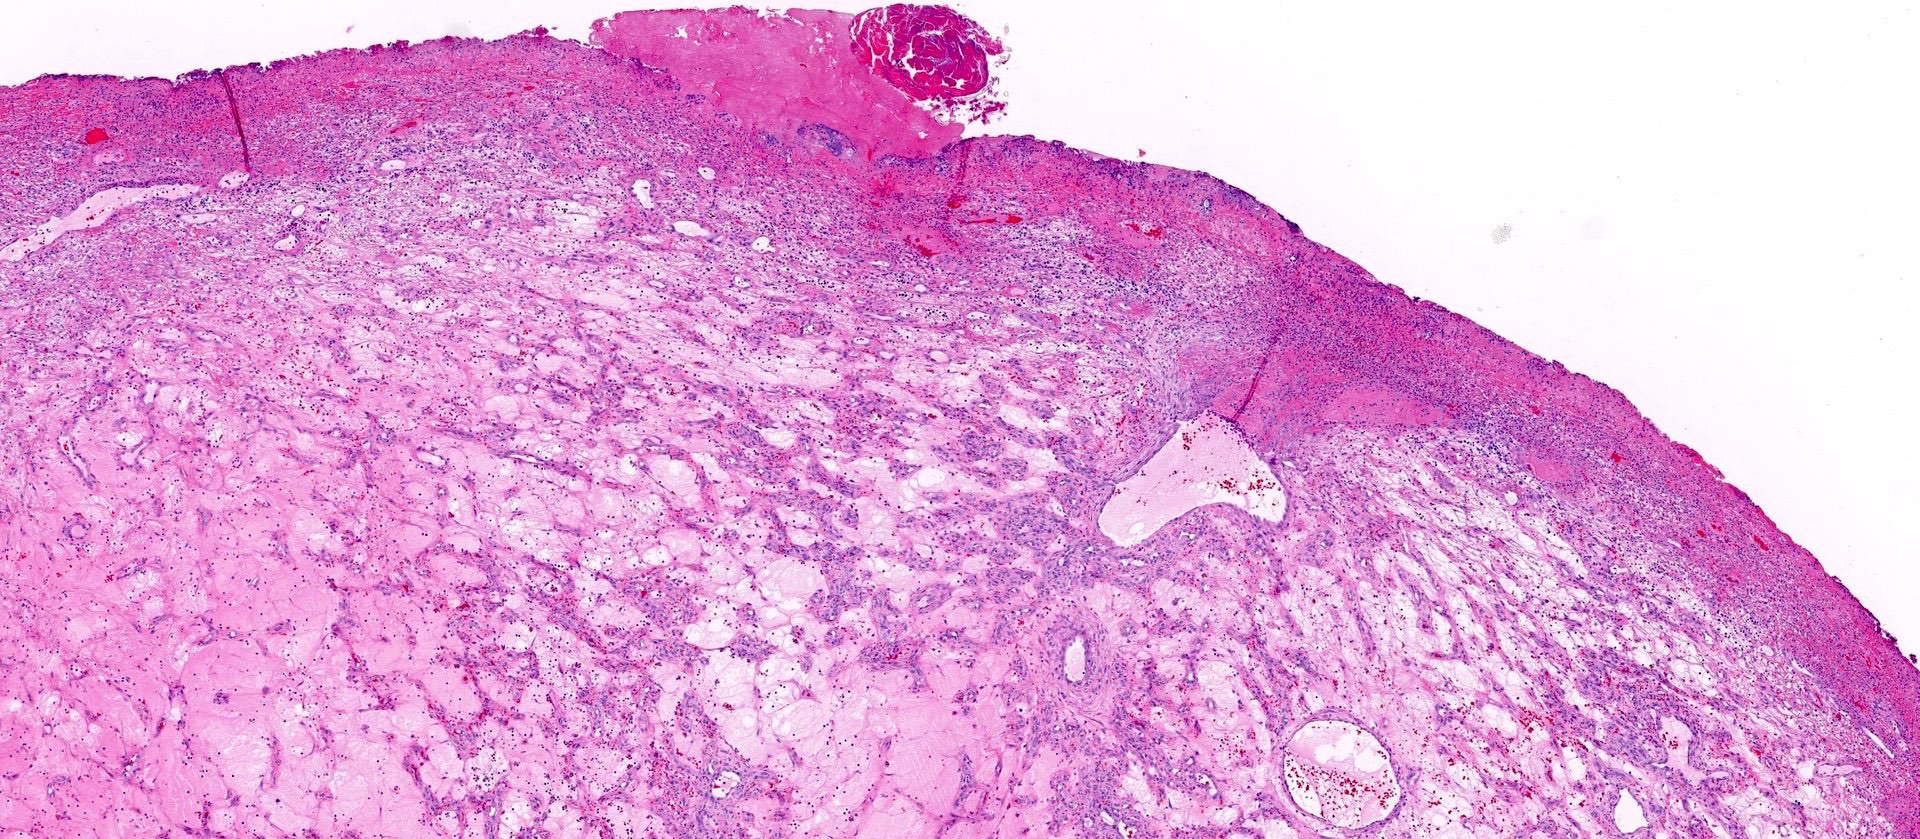 Lobular capillary hemangioma